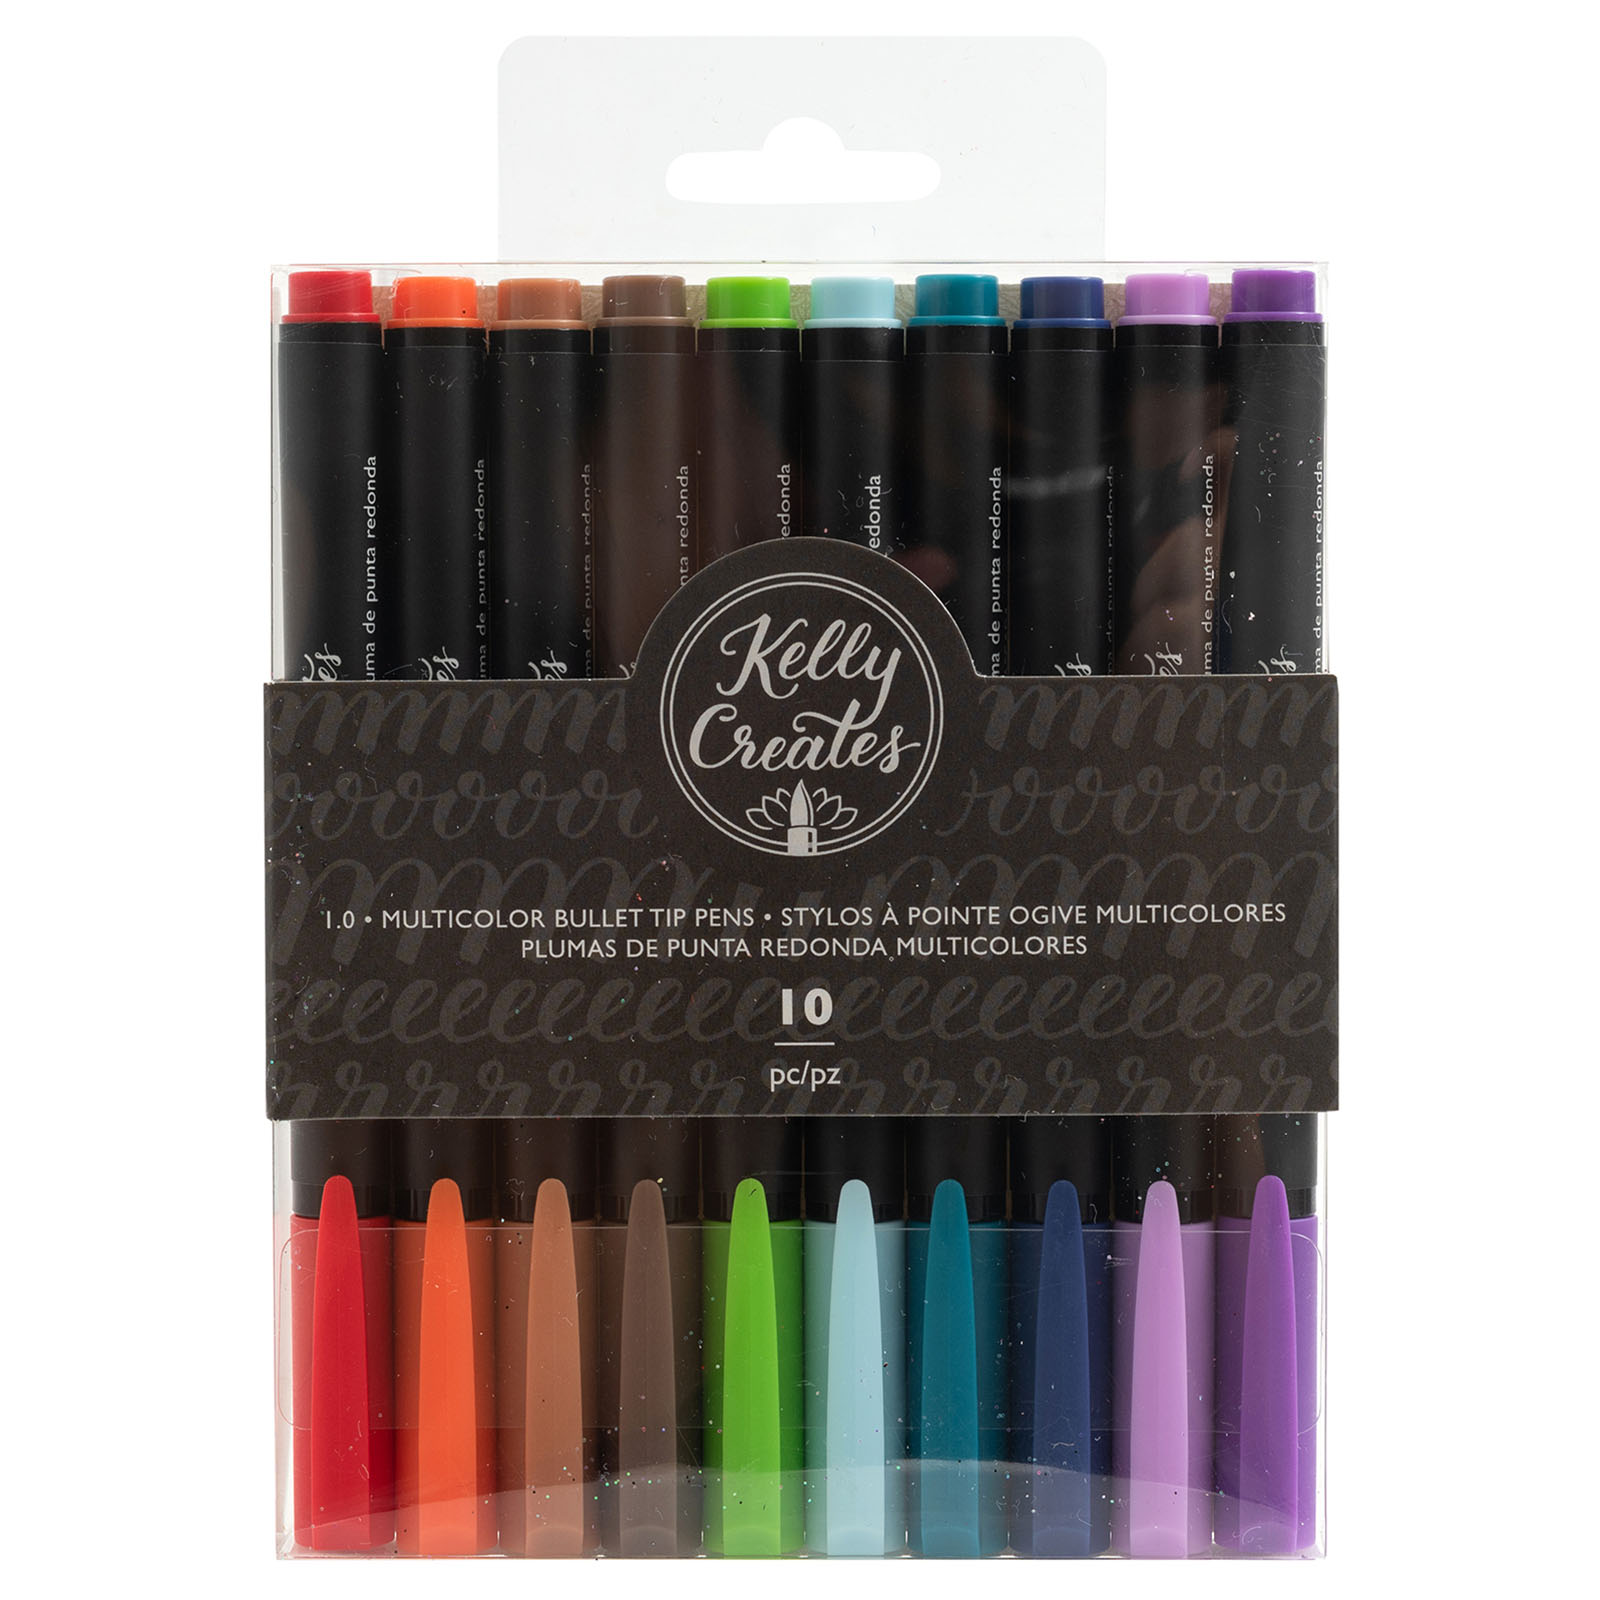 Kelly Creates • Pen multicolor 1.0 bullet tip 1 10pcs